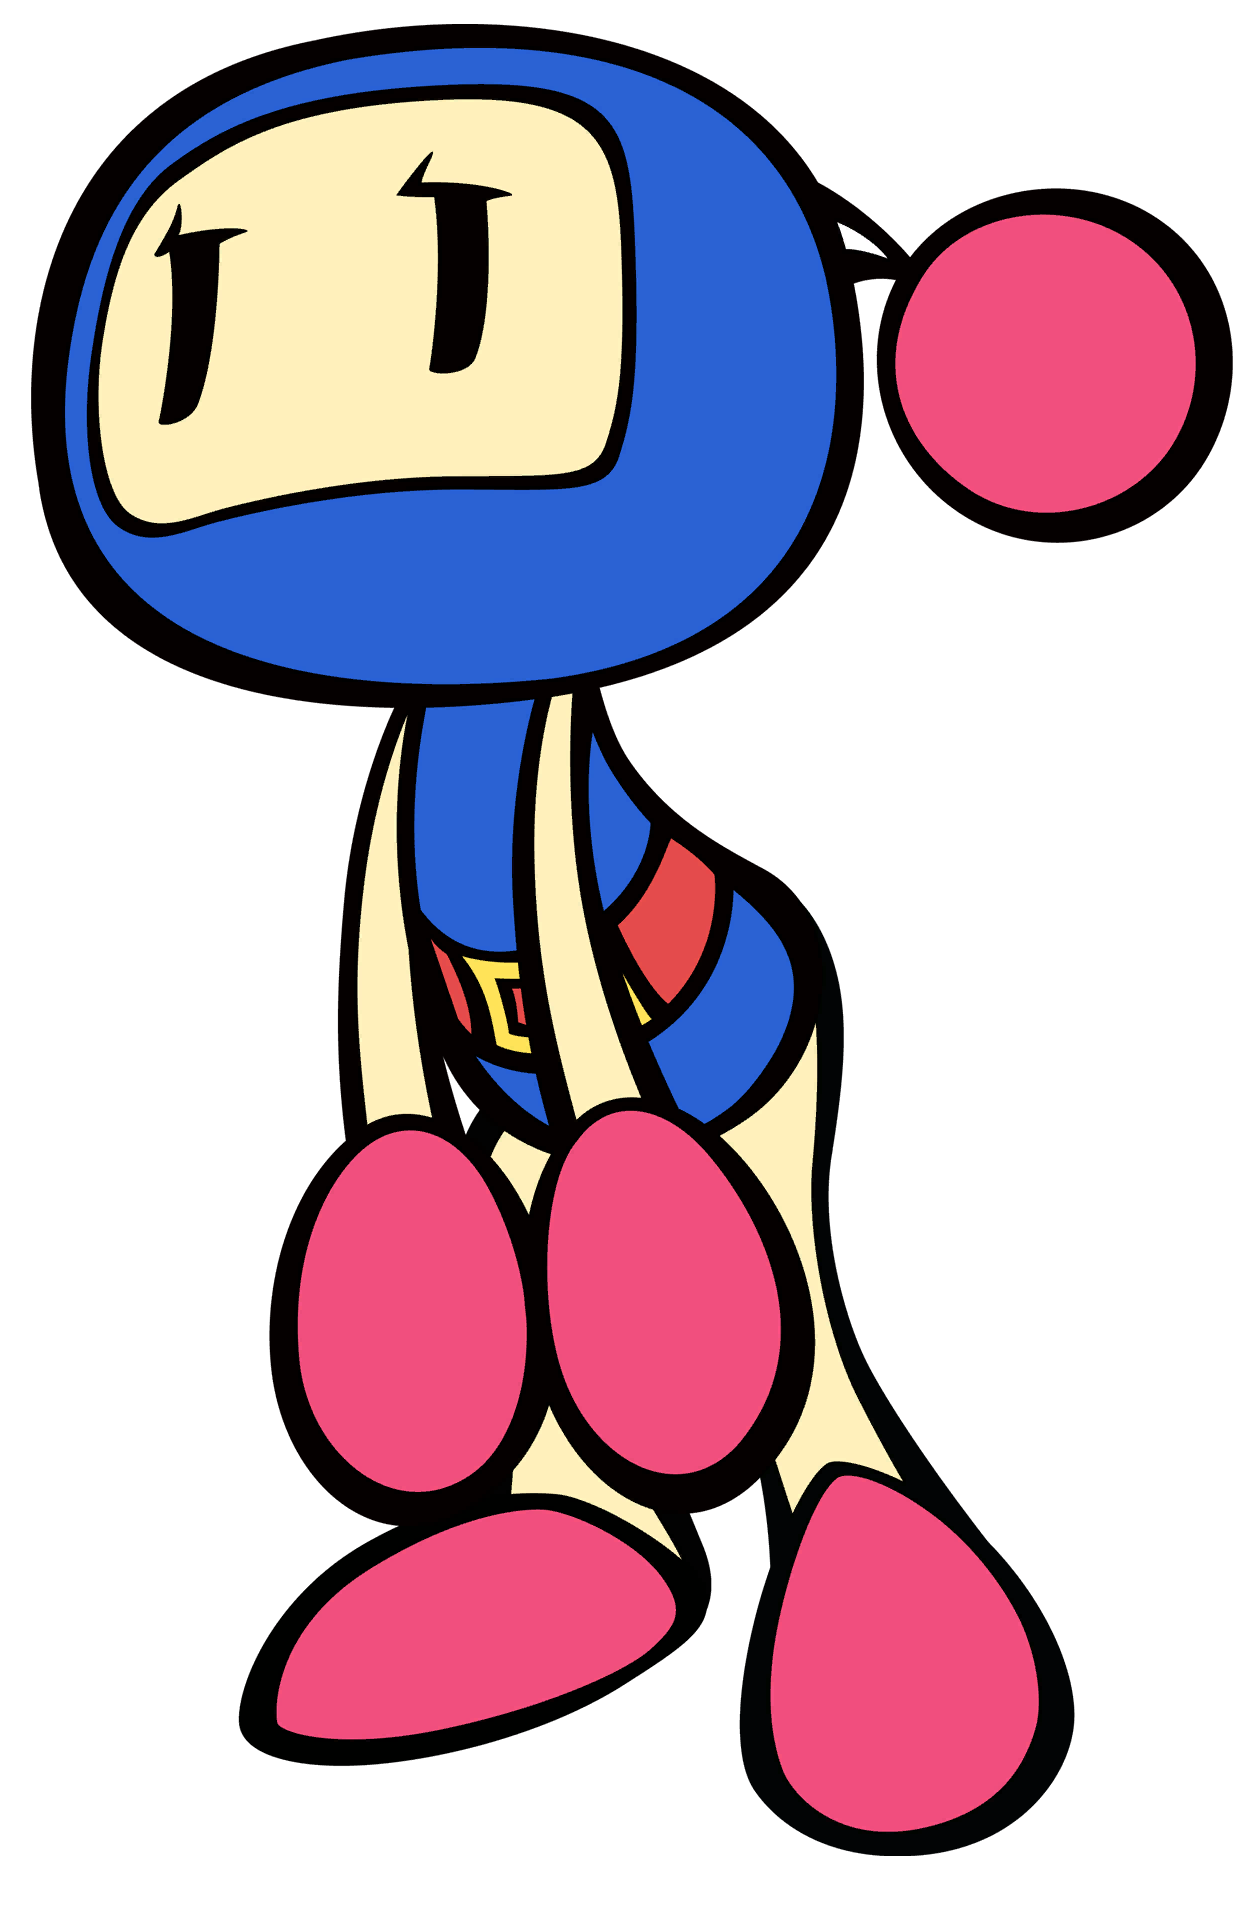 Blue Bomberman, Bomberman Wiki